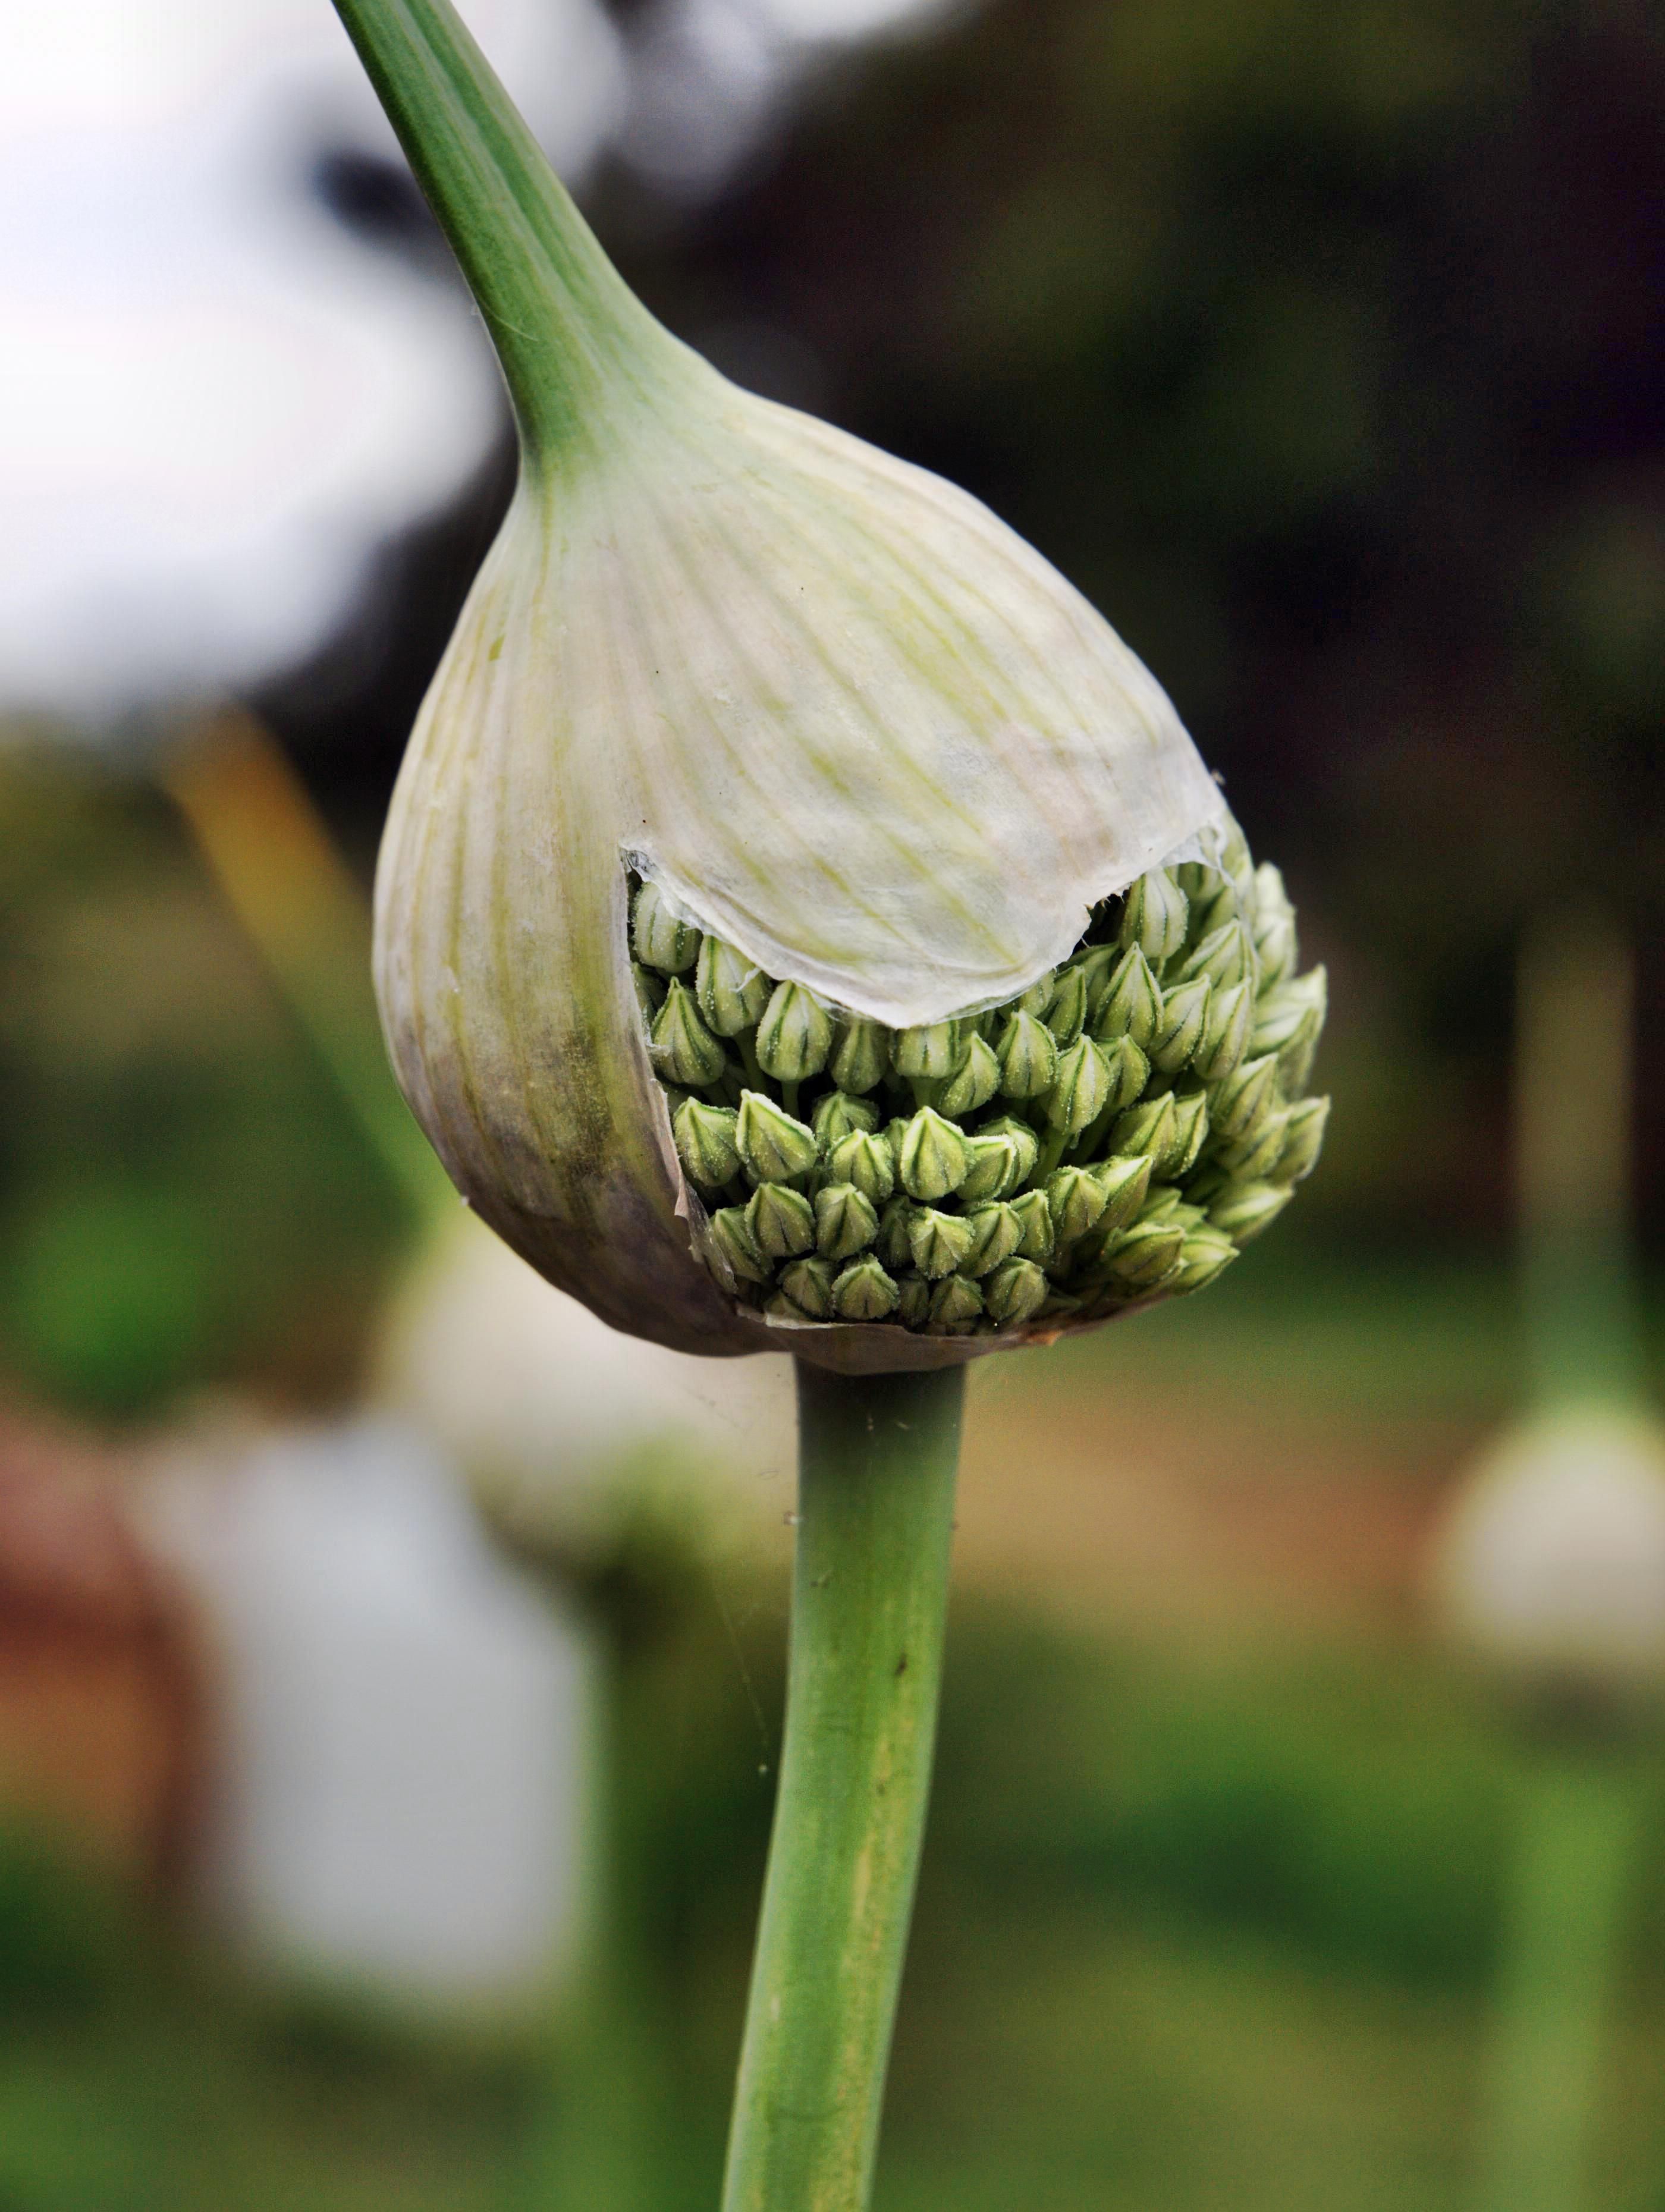 garlic flower | bulbs n such | Pinterest | Garlic flower